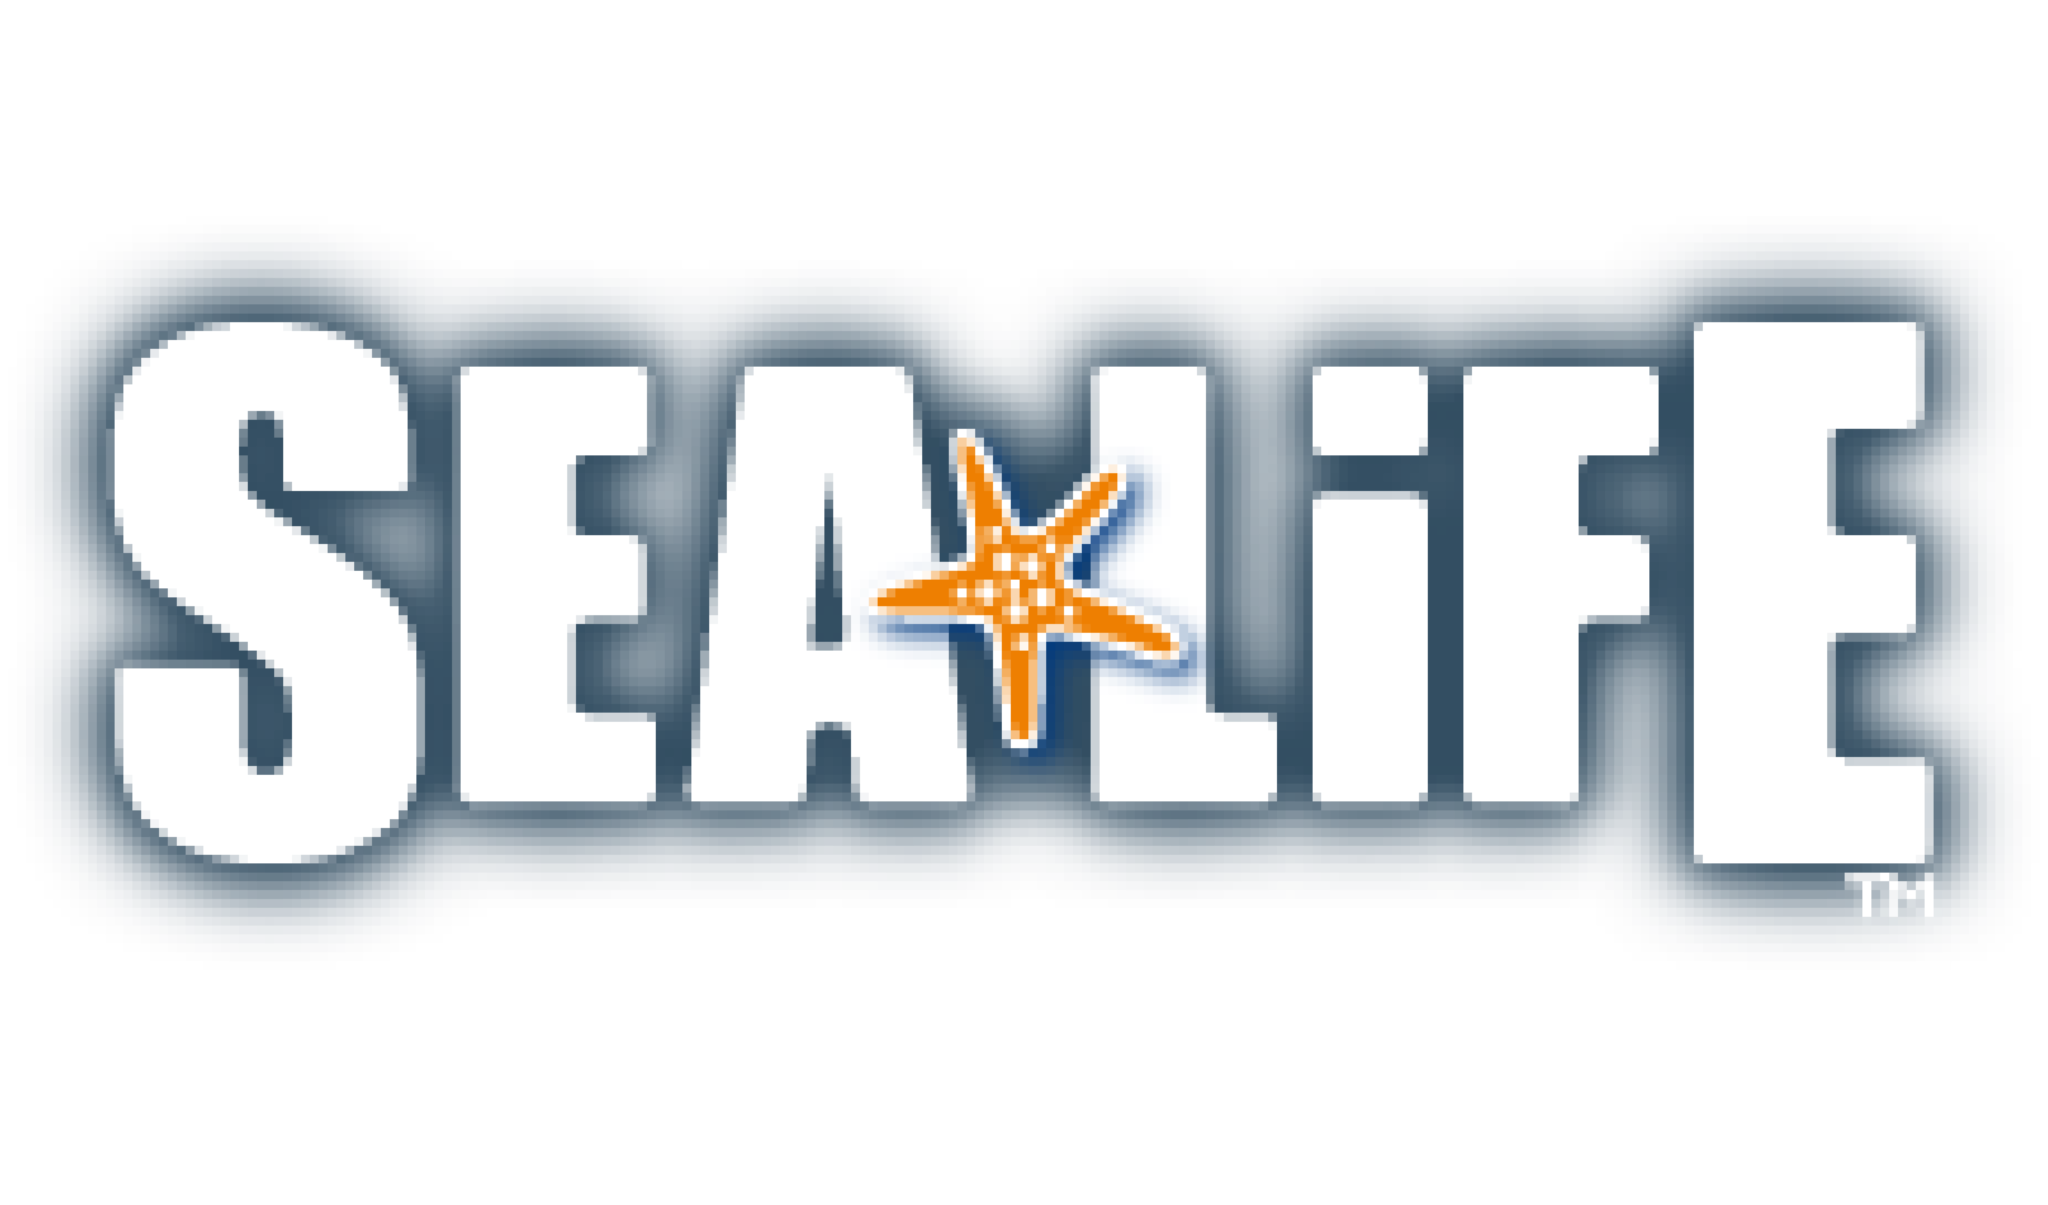 The Sealife logo